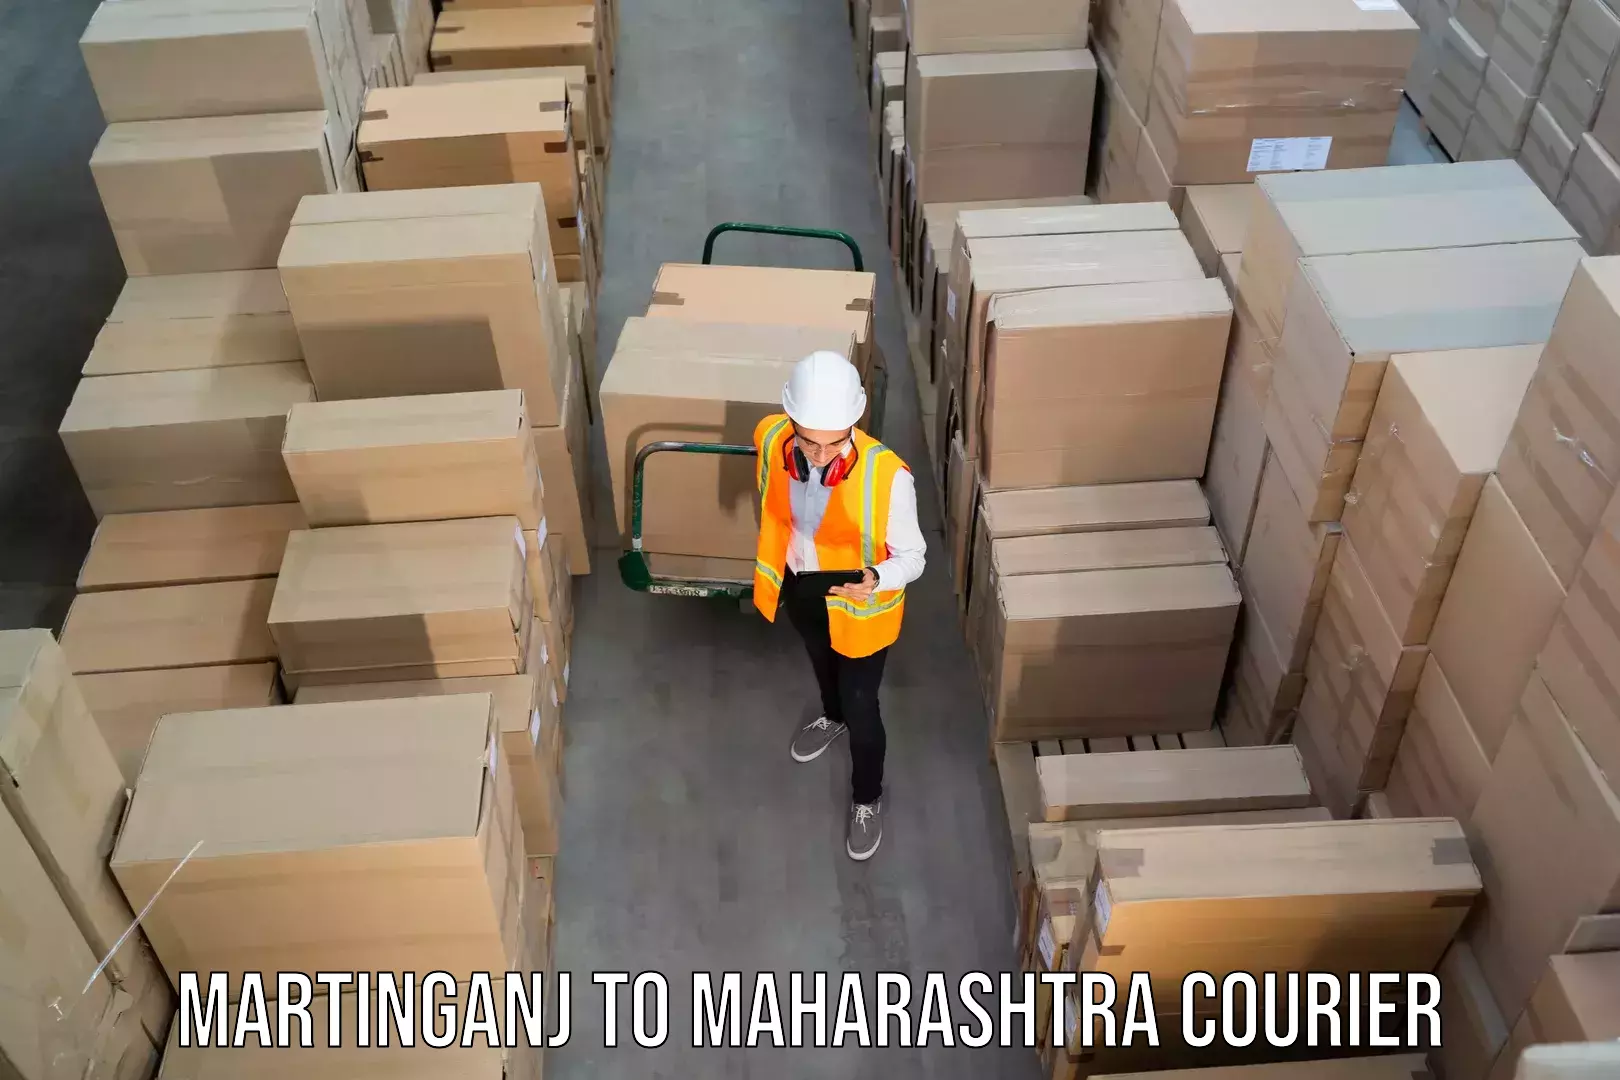 Courier service partnerships Martinganj to Brahmapuri